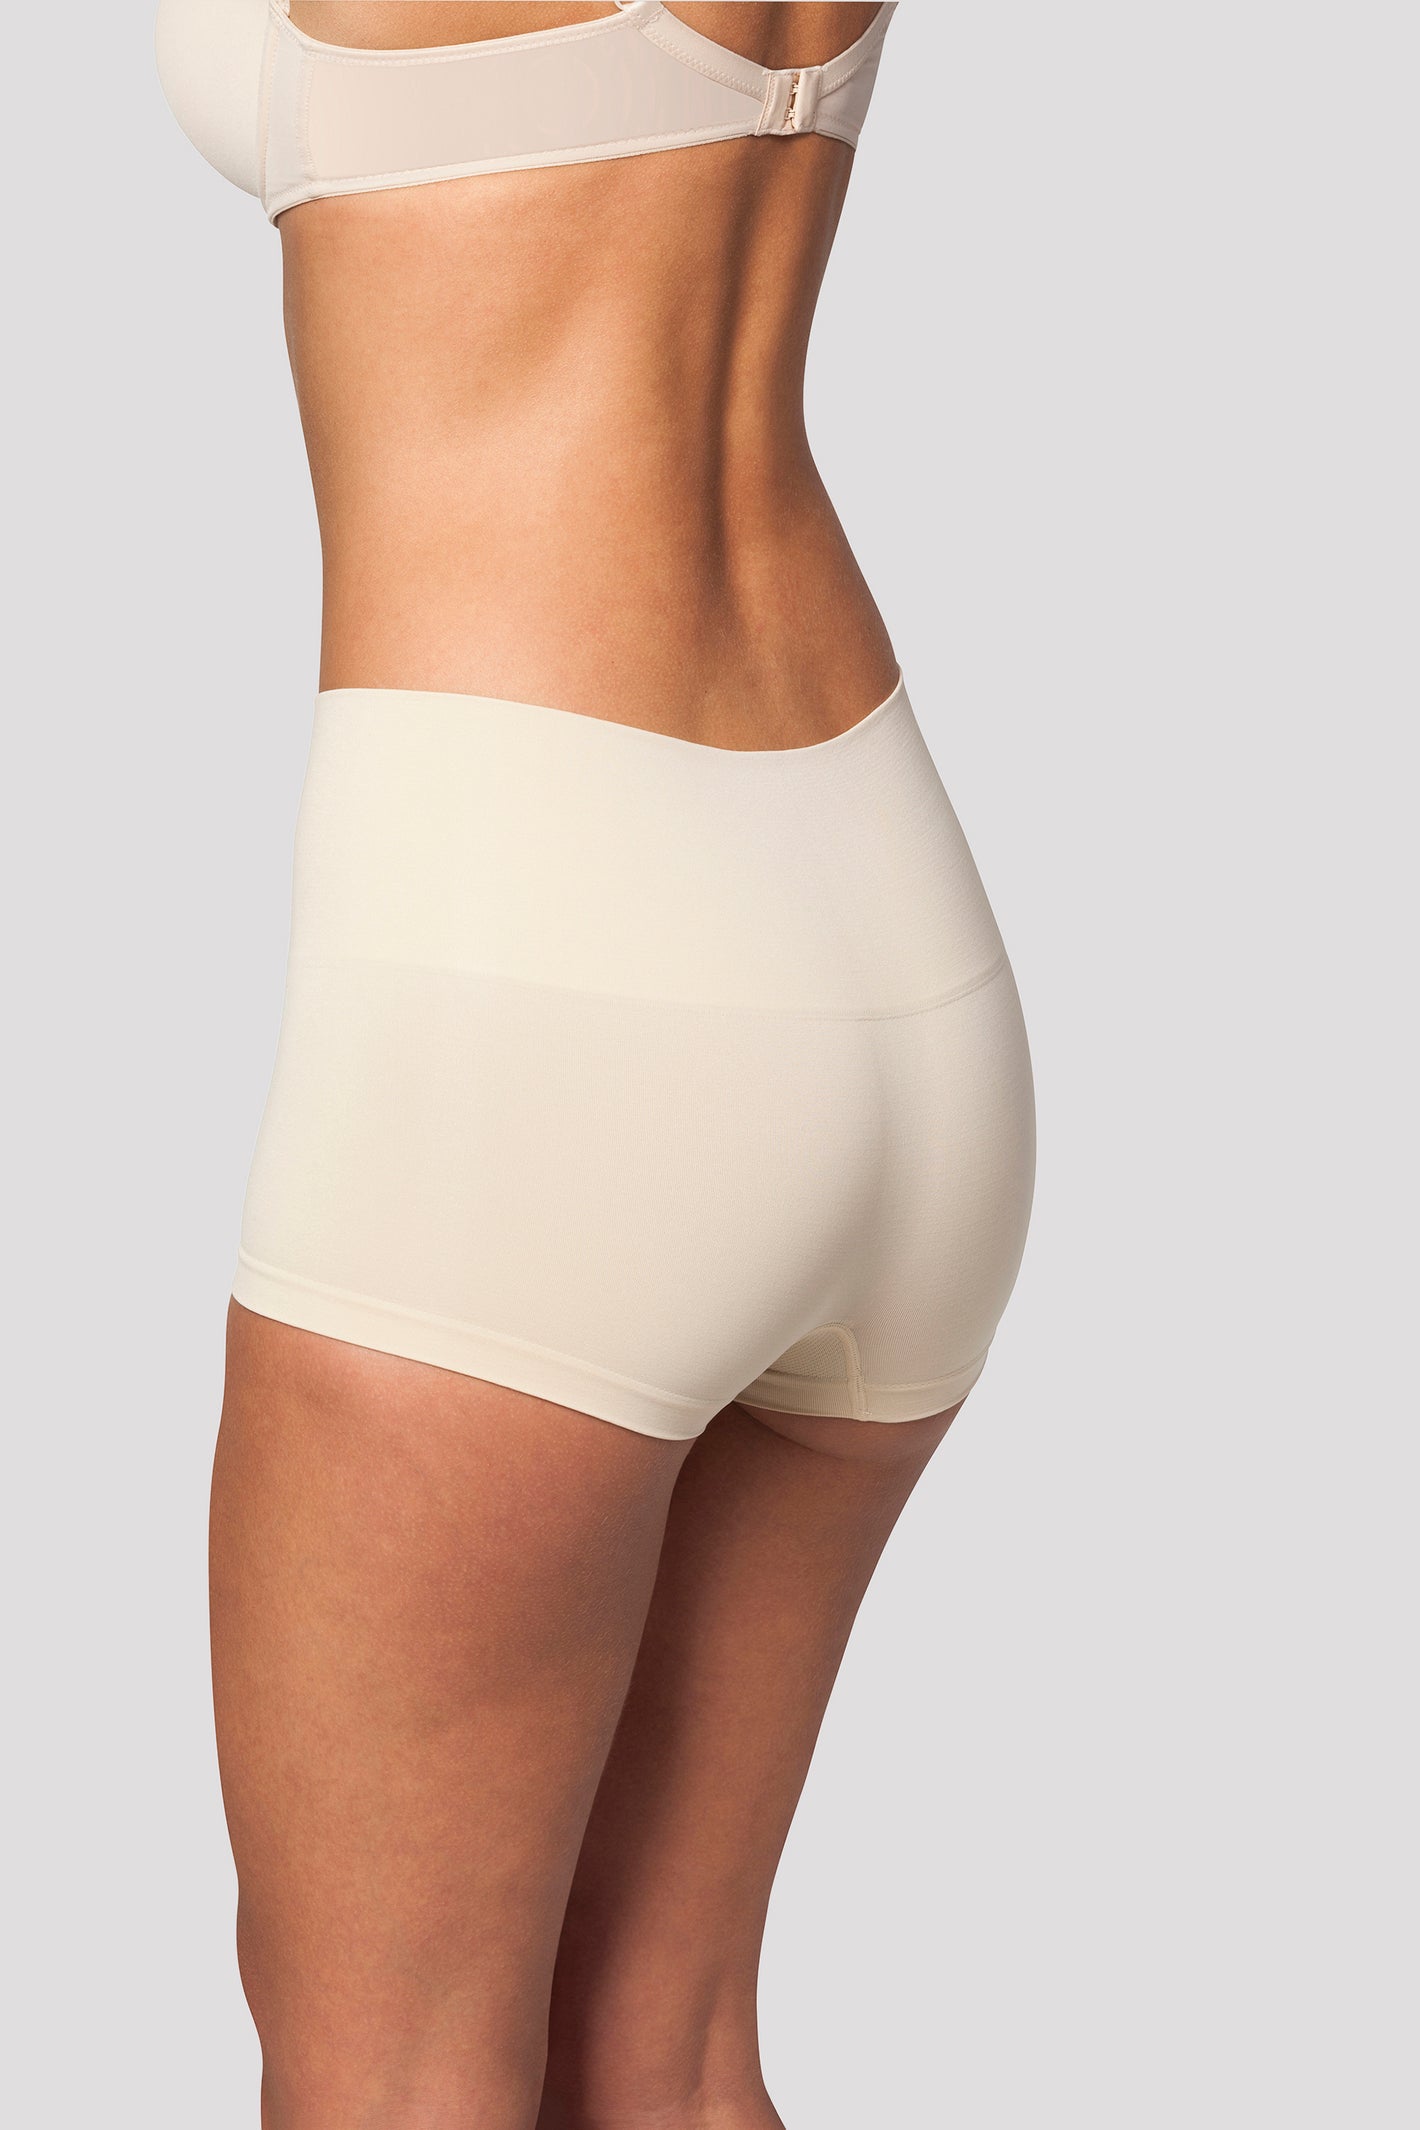 shapewear shorts back view - Nude